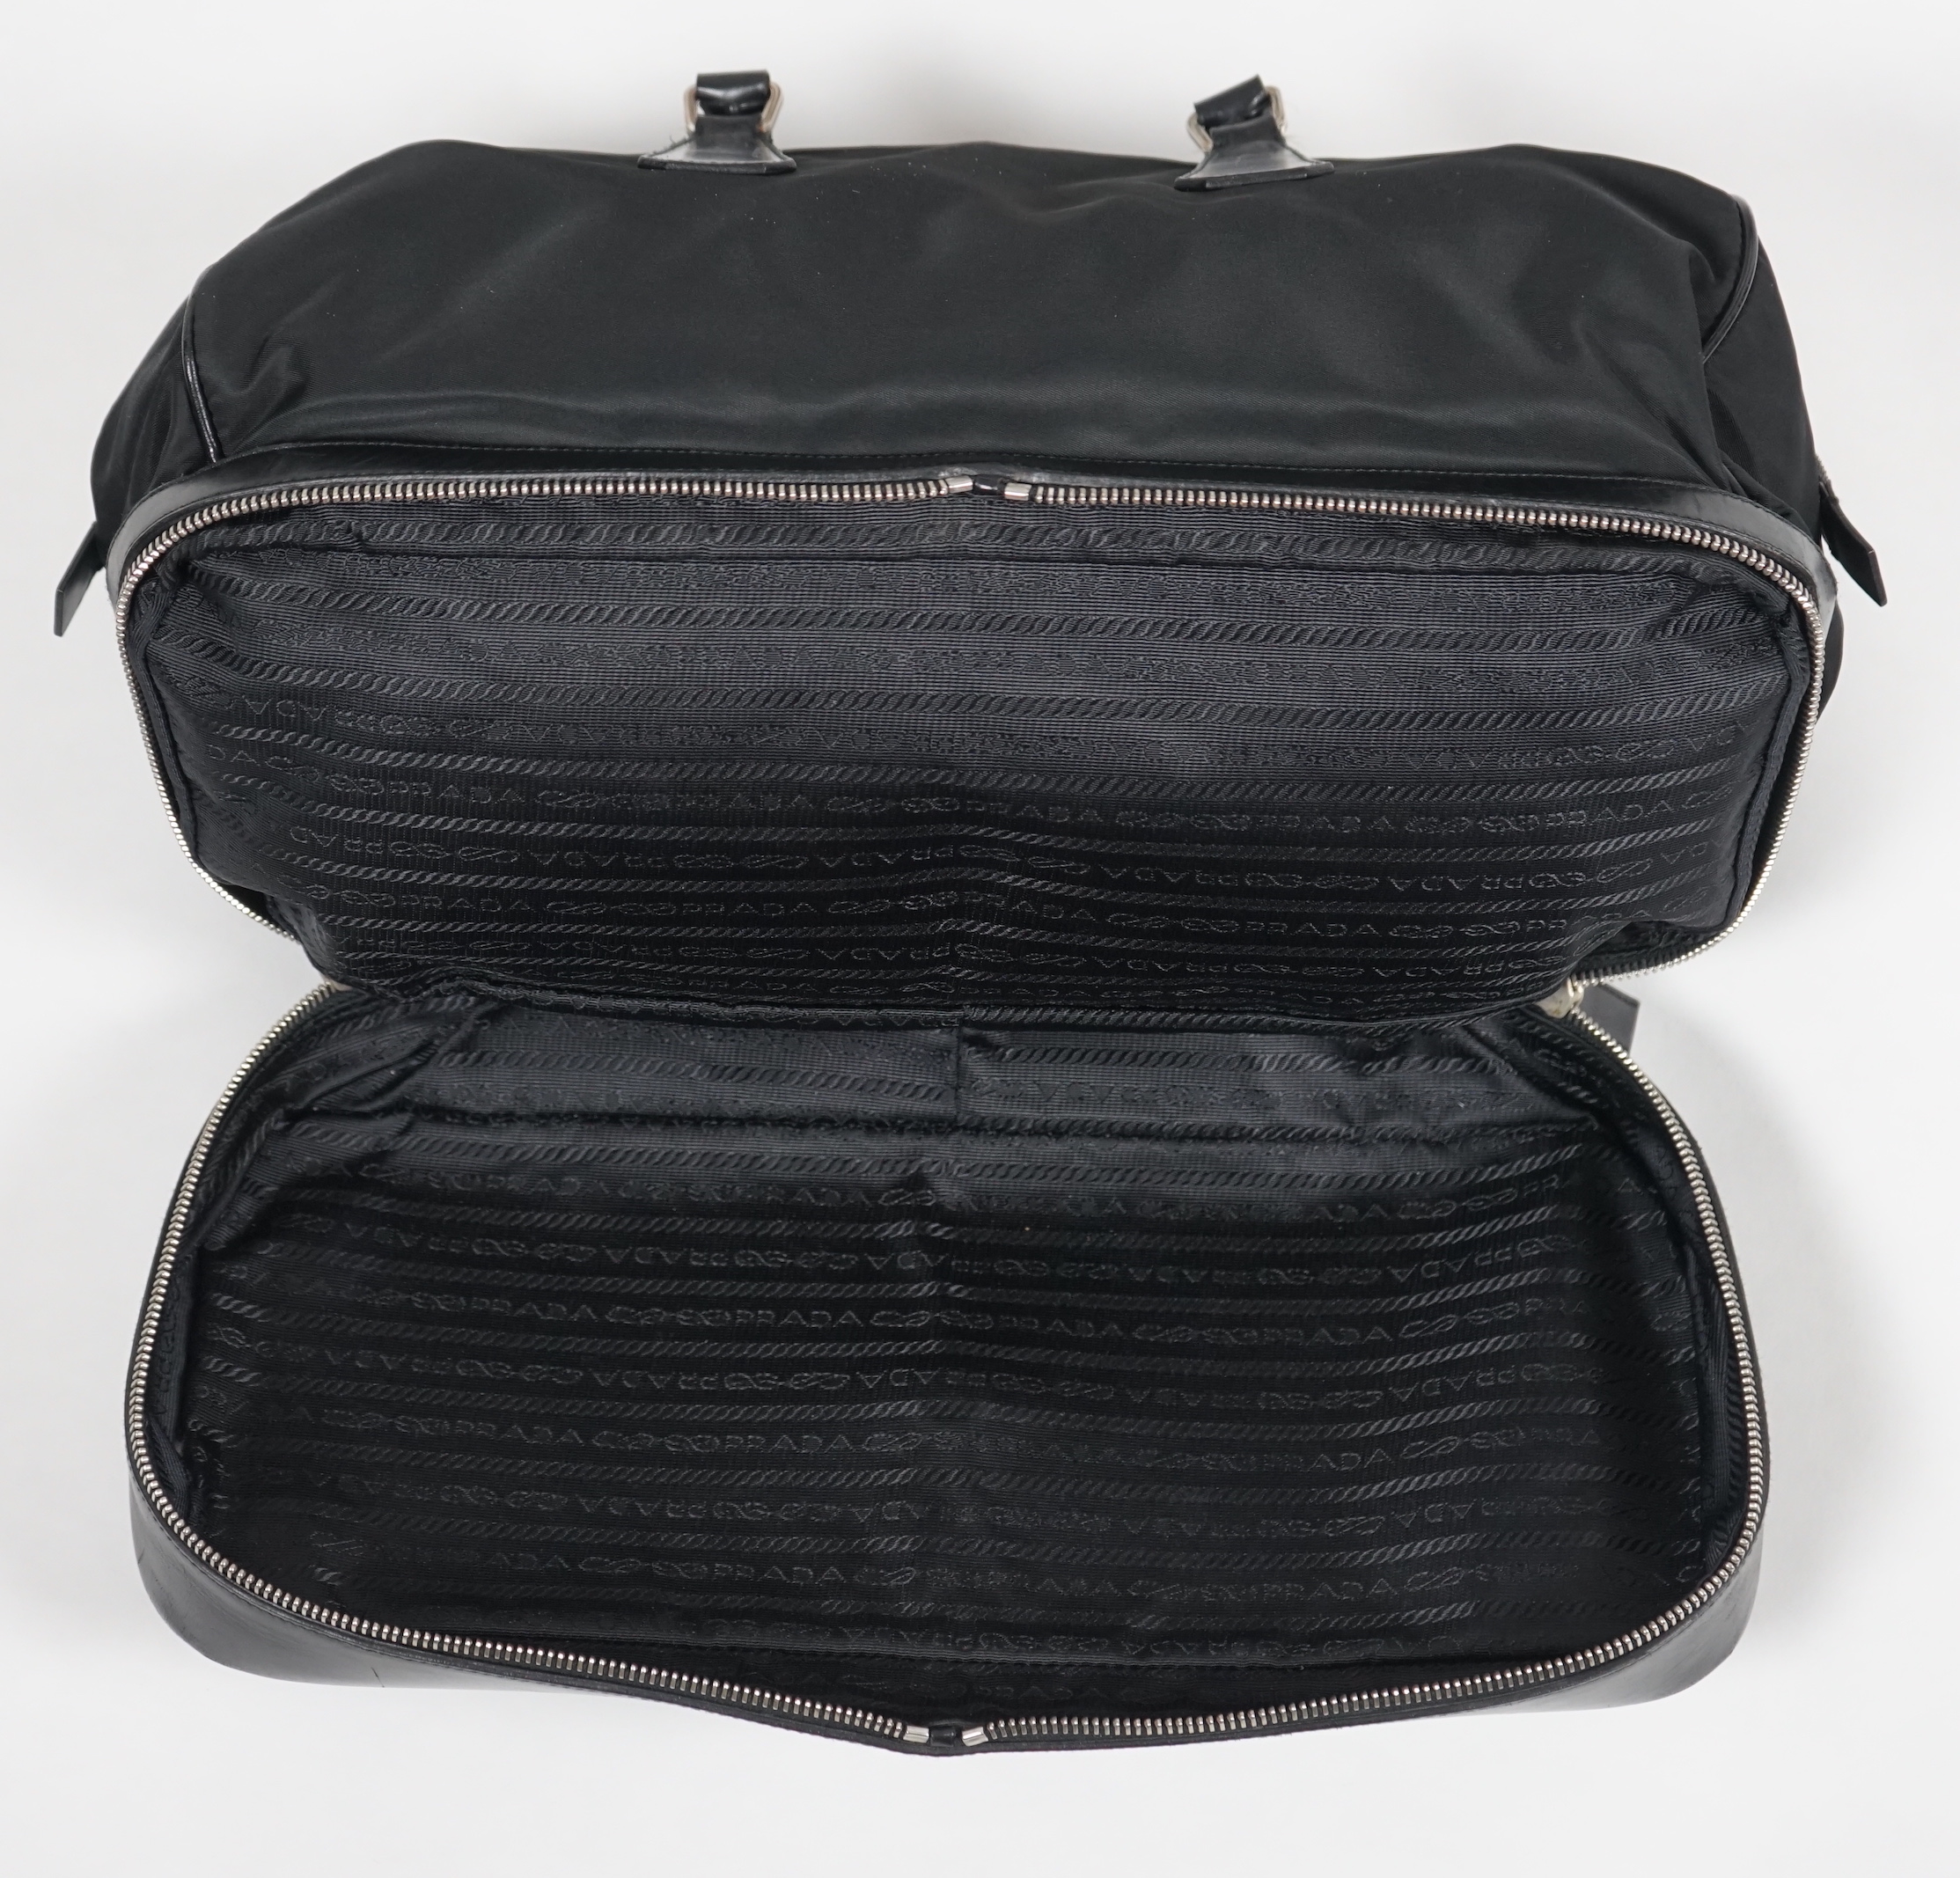 A Prada Tessuto black nylon and leather bag, width 38cm, height 23cm, depth 50cm